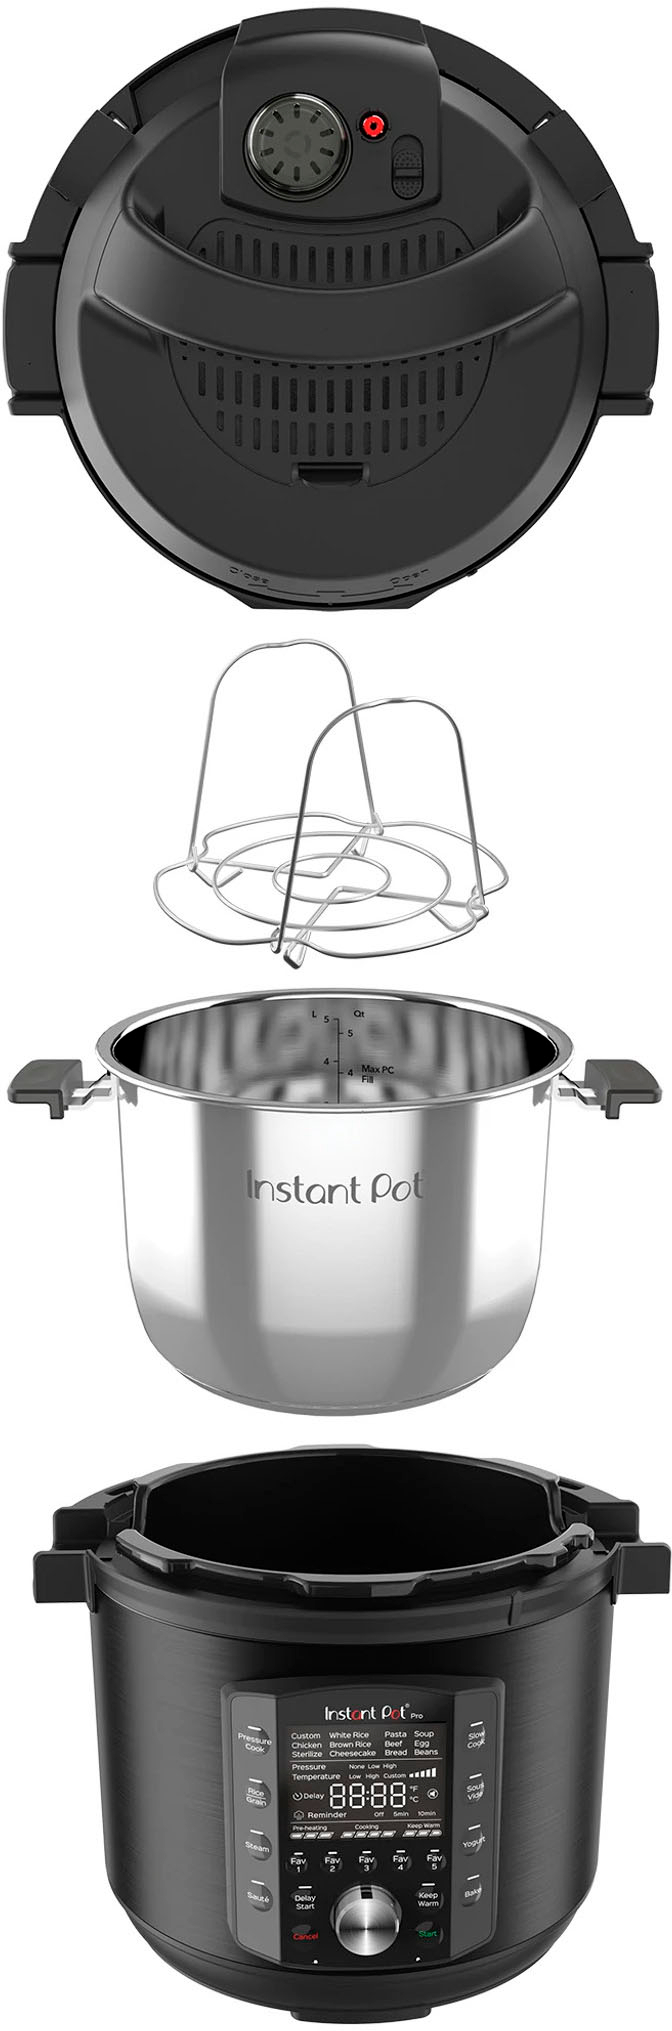 Instant Pot 6 qt. Matte Black Duo Pro Electric Pressure Cooker 112-0123-01  - The Home Depot